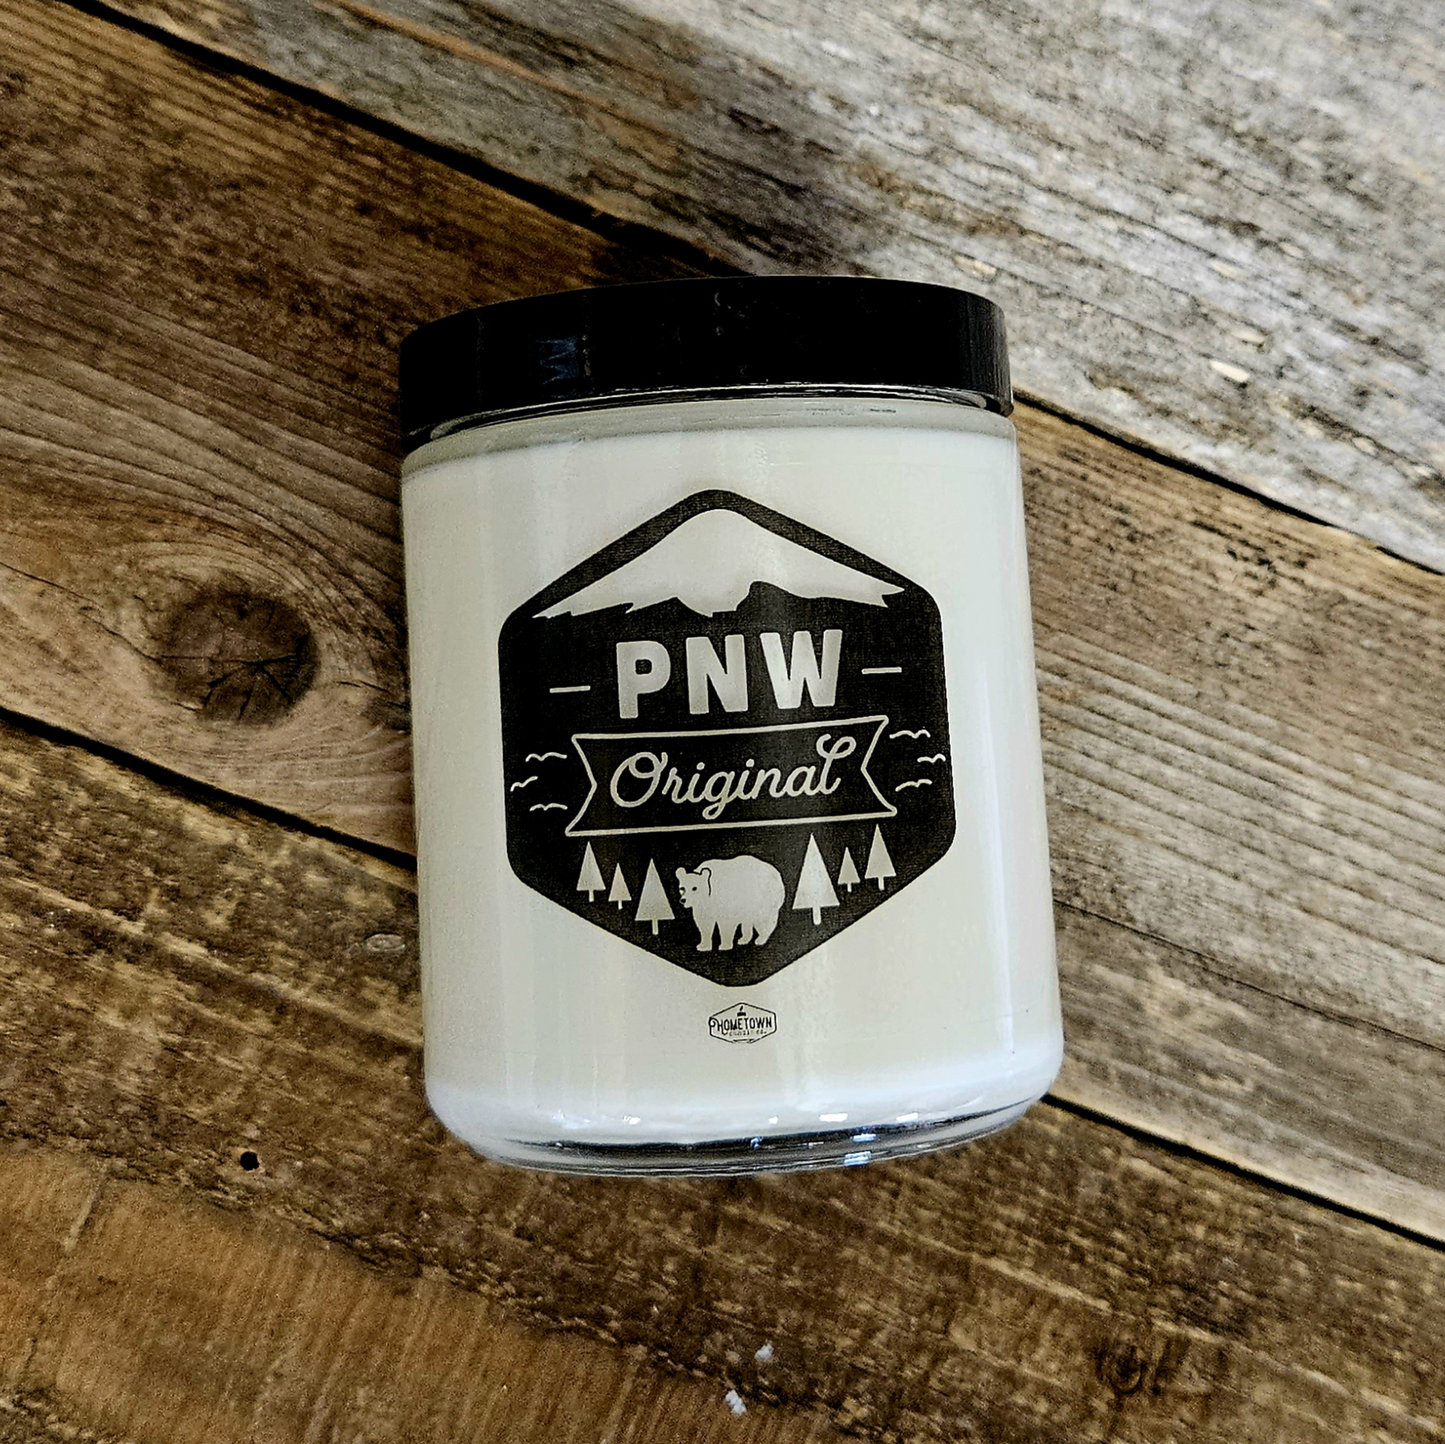 PNW Original Candle (6 oz)